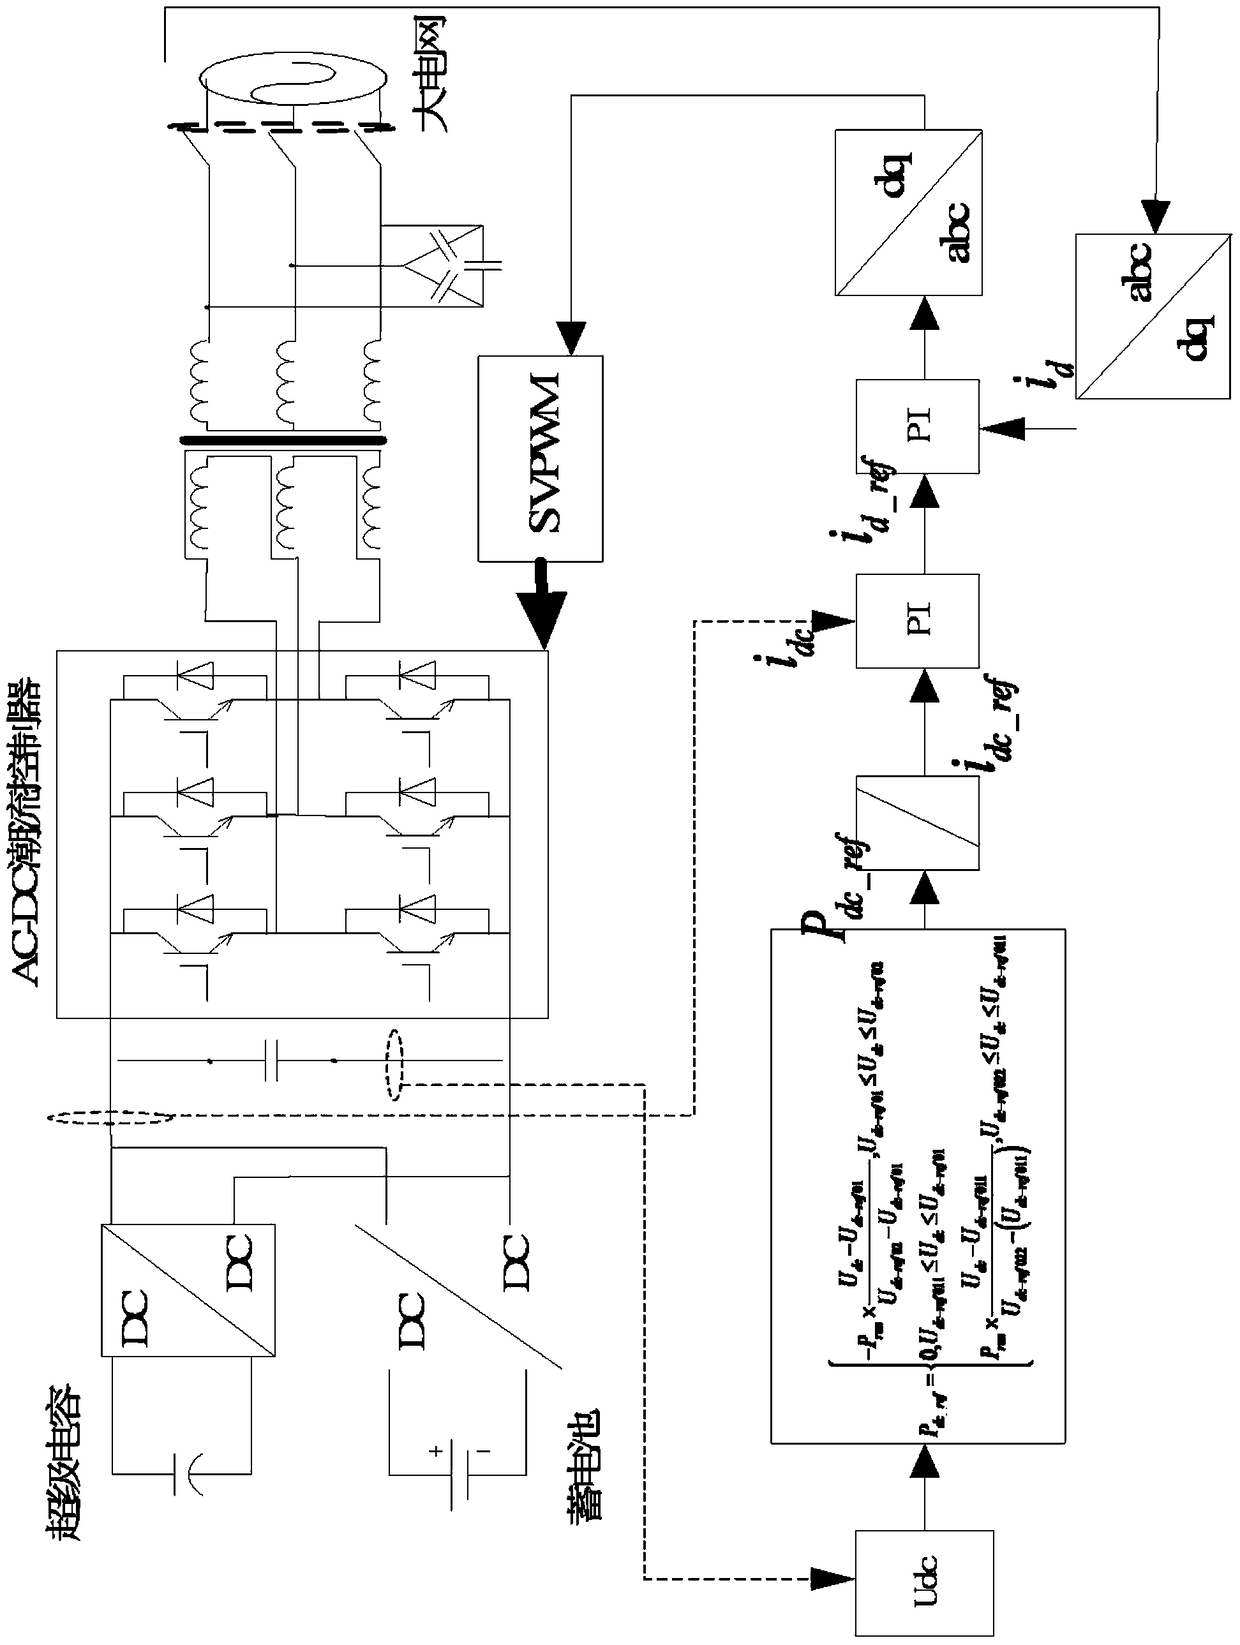 A DC bus voltage control method for AC-DC hybrid microgrid